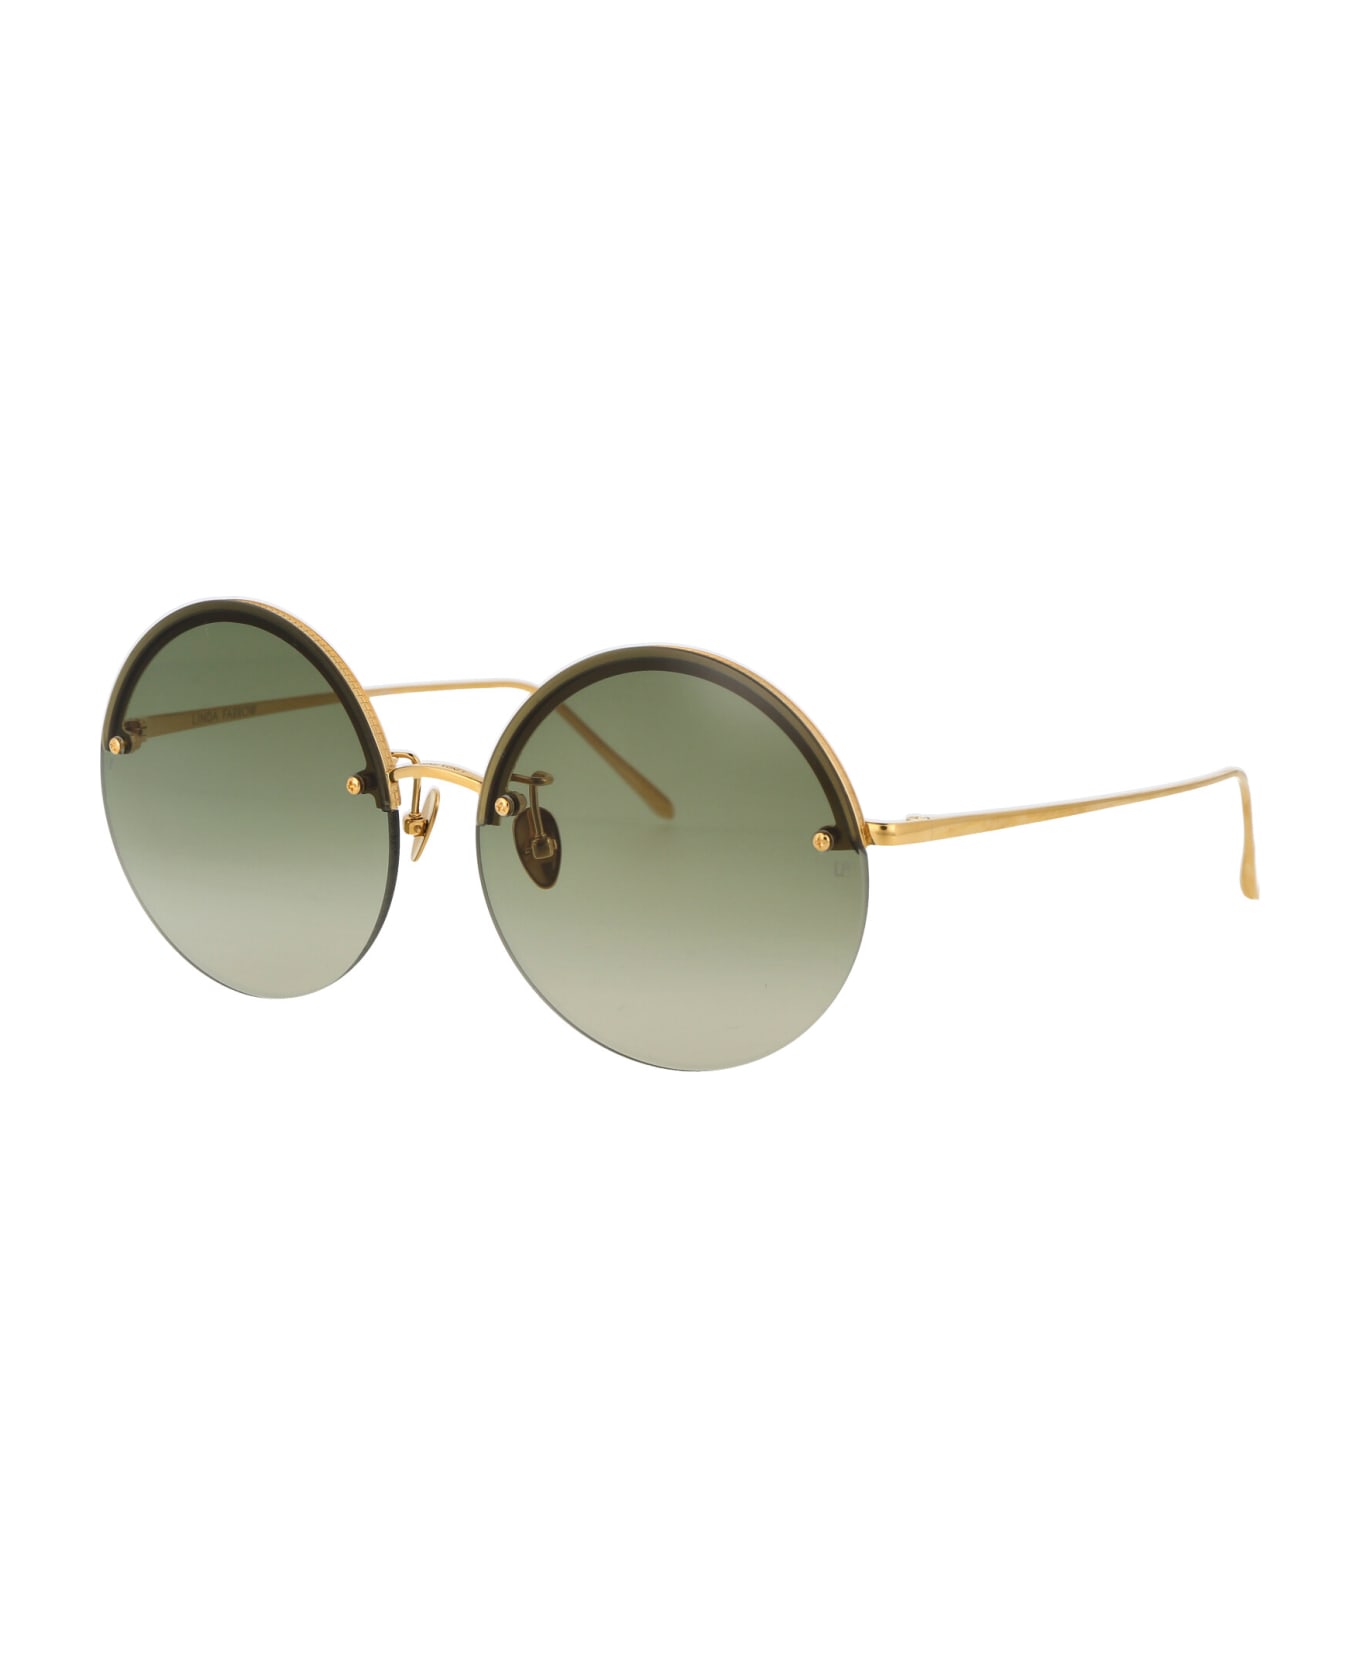 Linda Farrow Adrienne Sunglasses - 002 YELLOW GOLD/GREEN サングラス